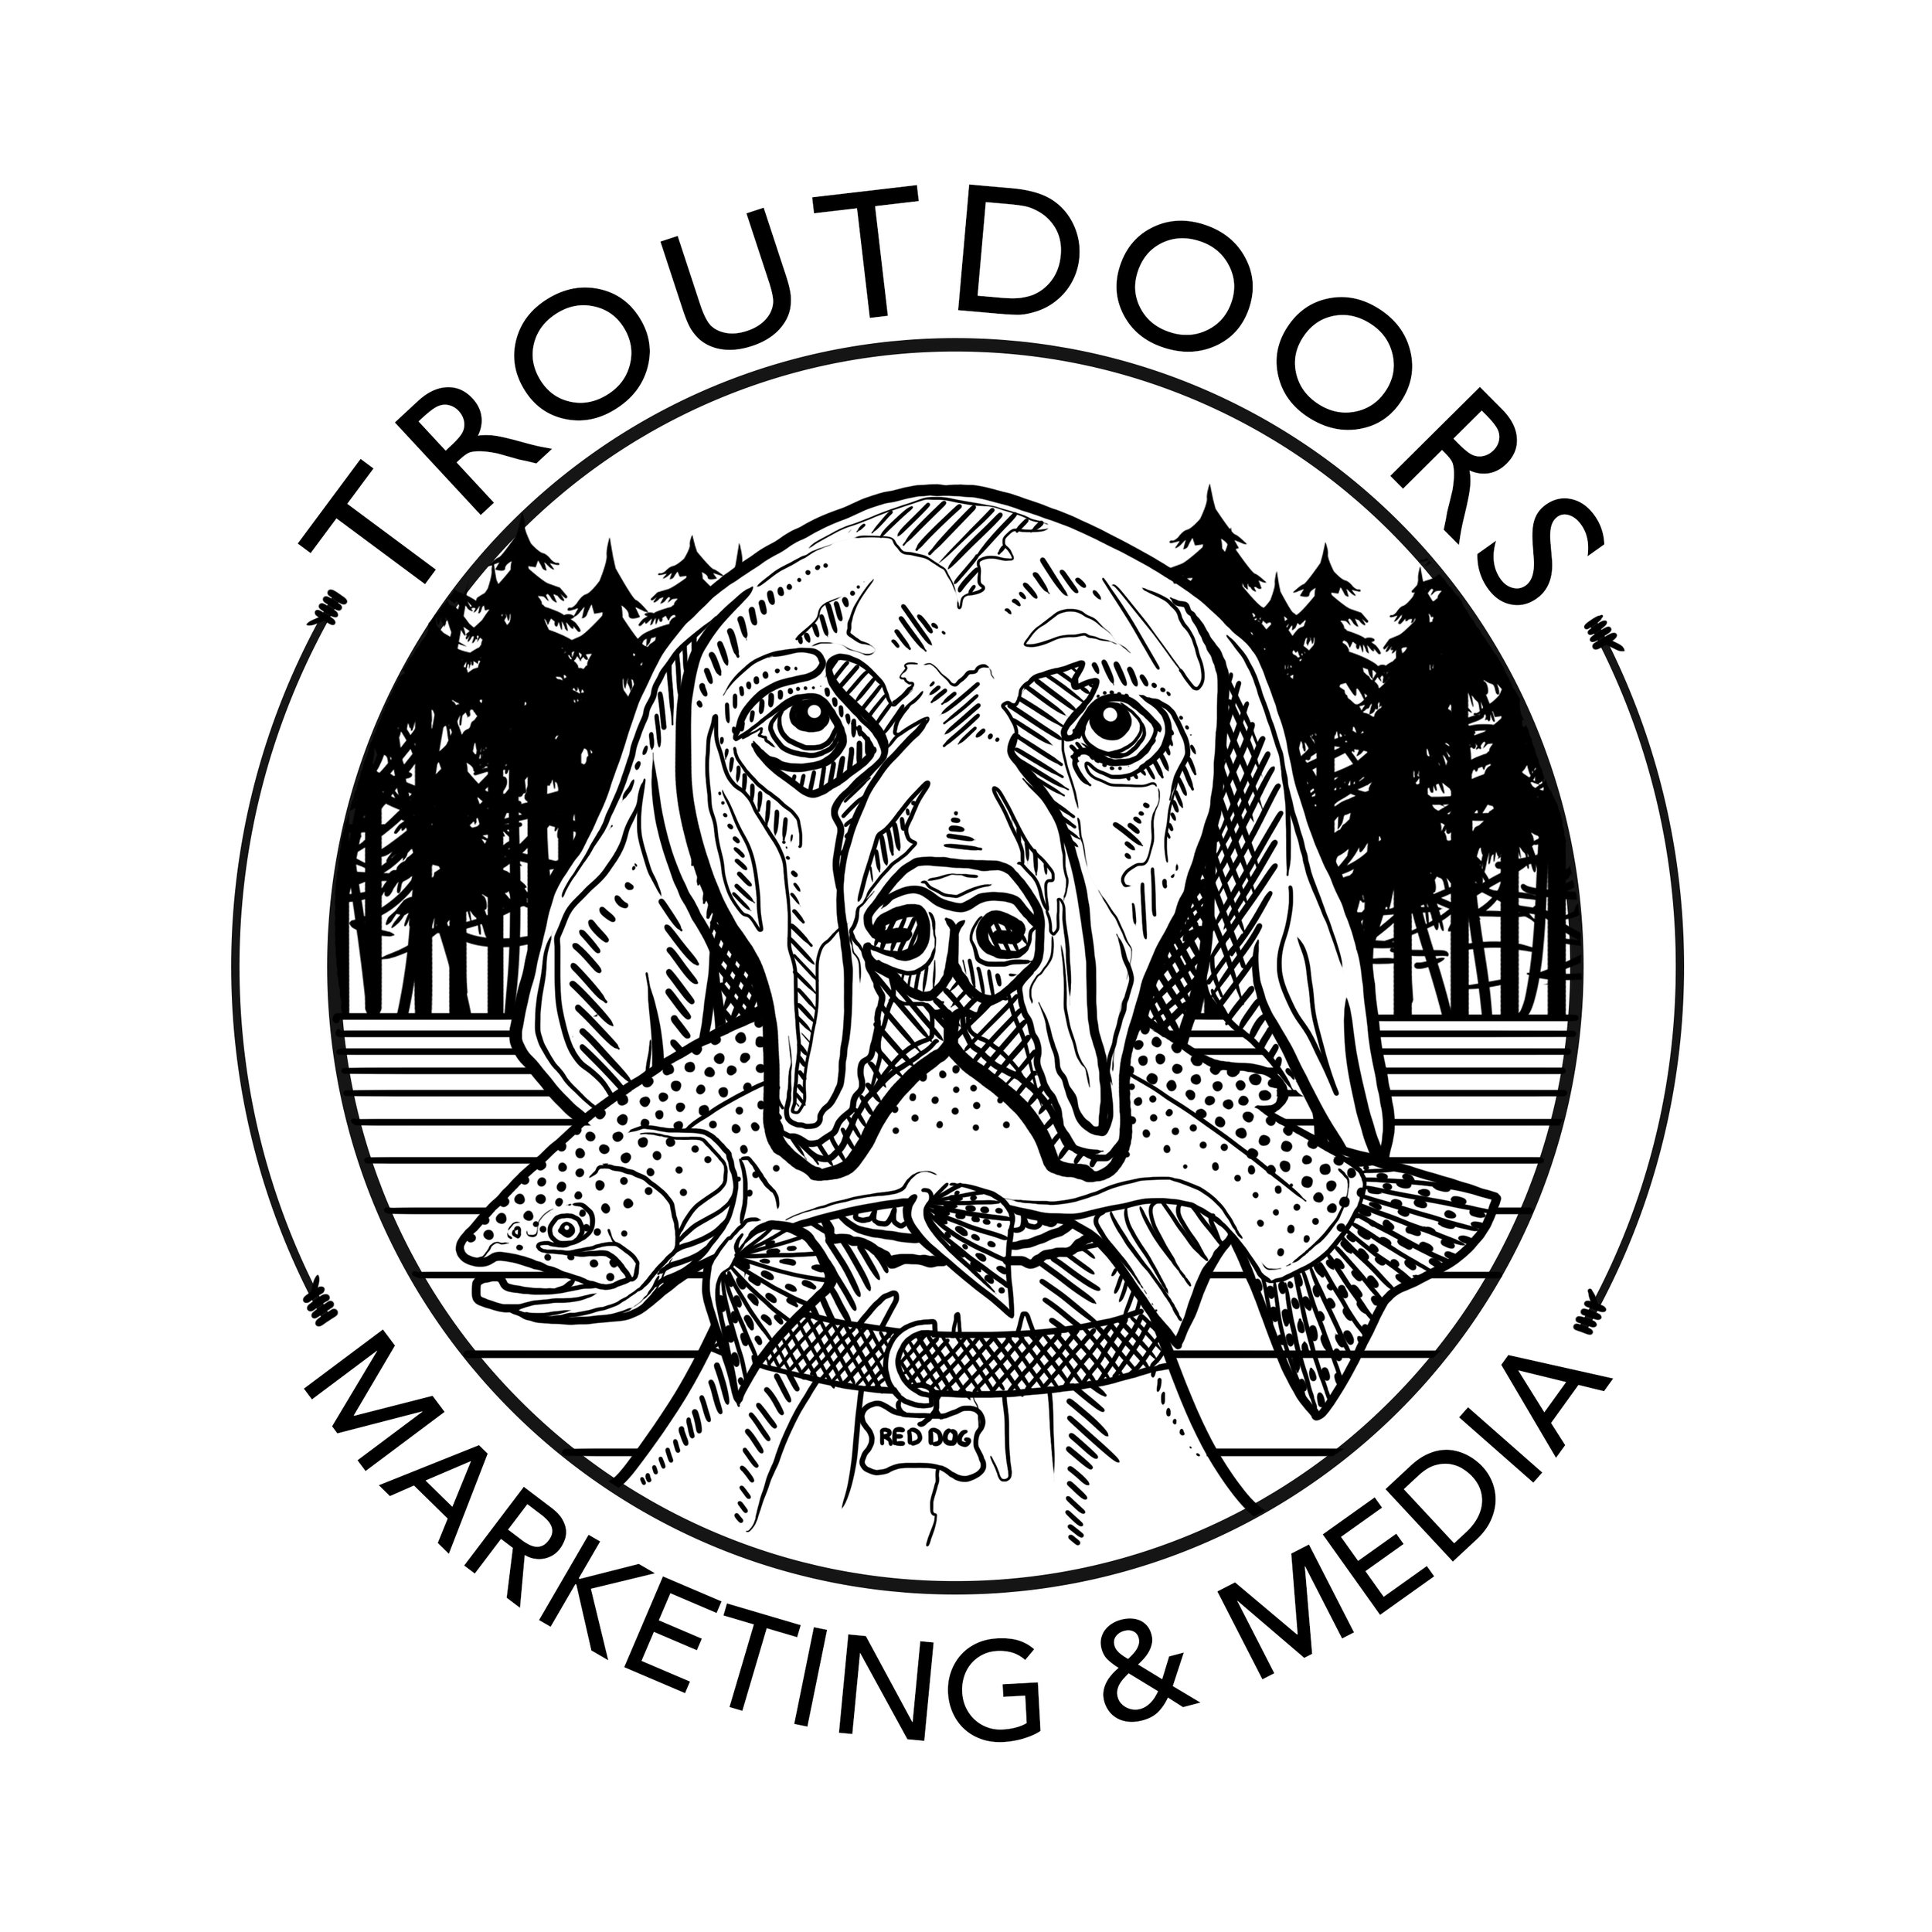 Troutdoors Marketing and Media